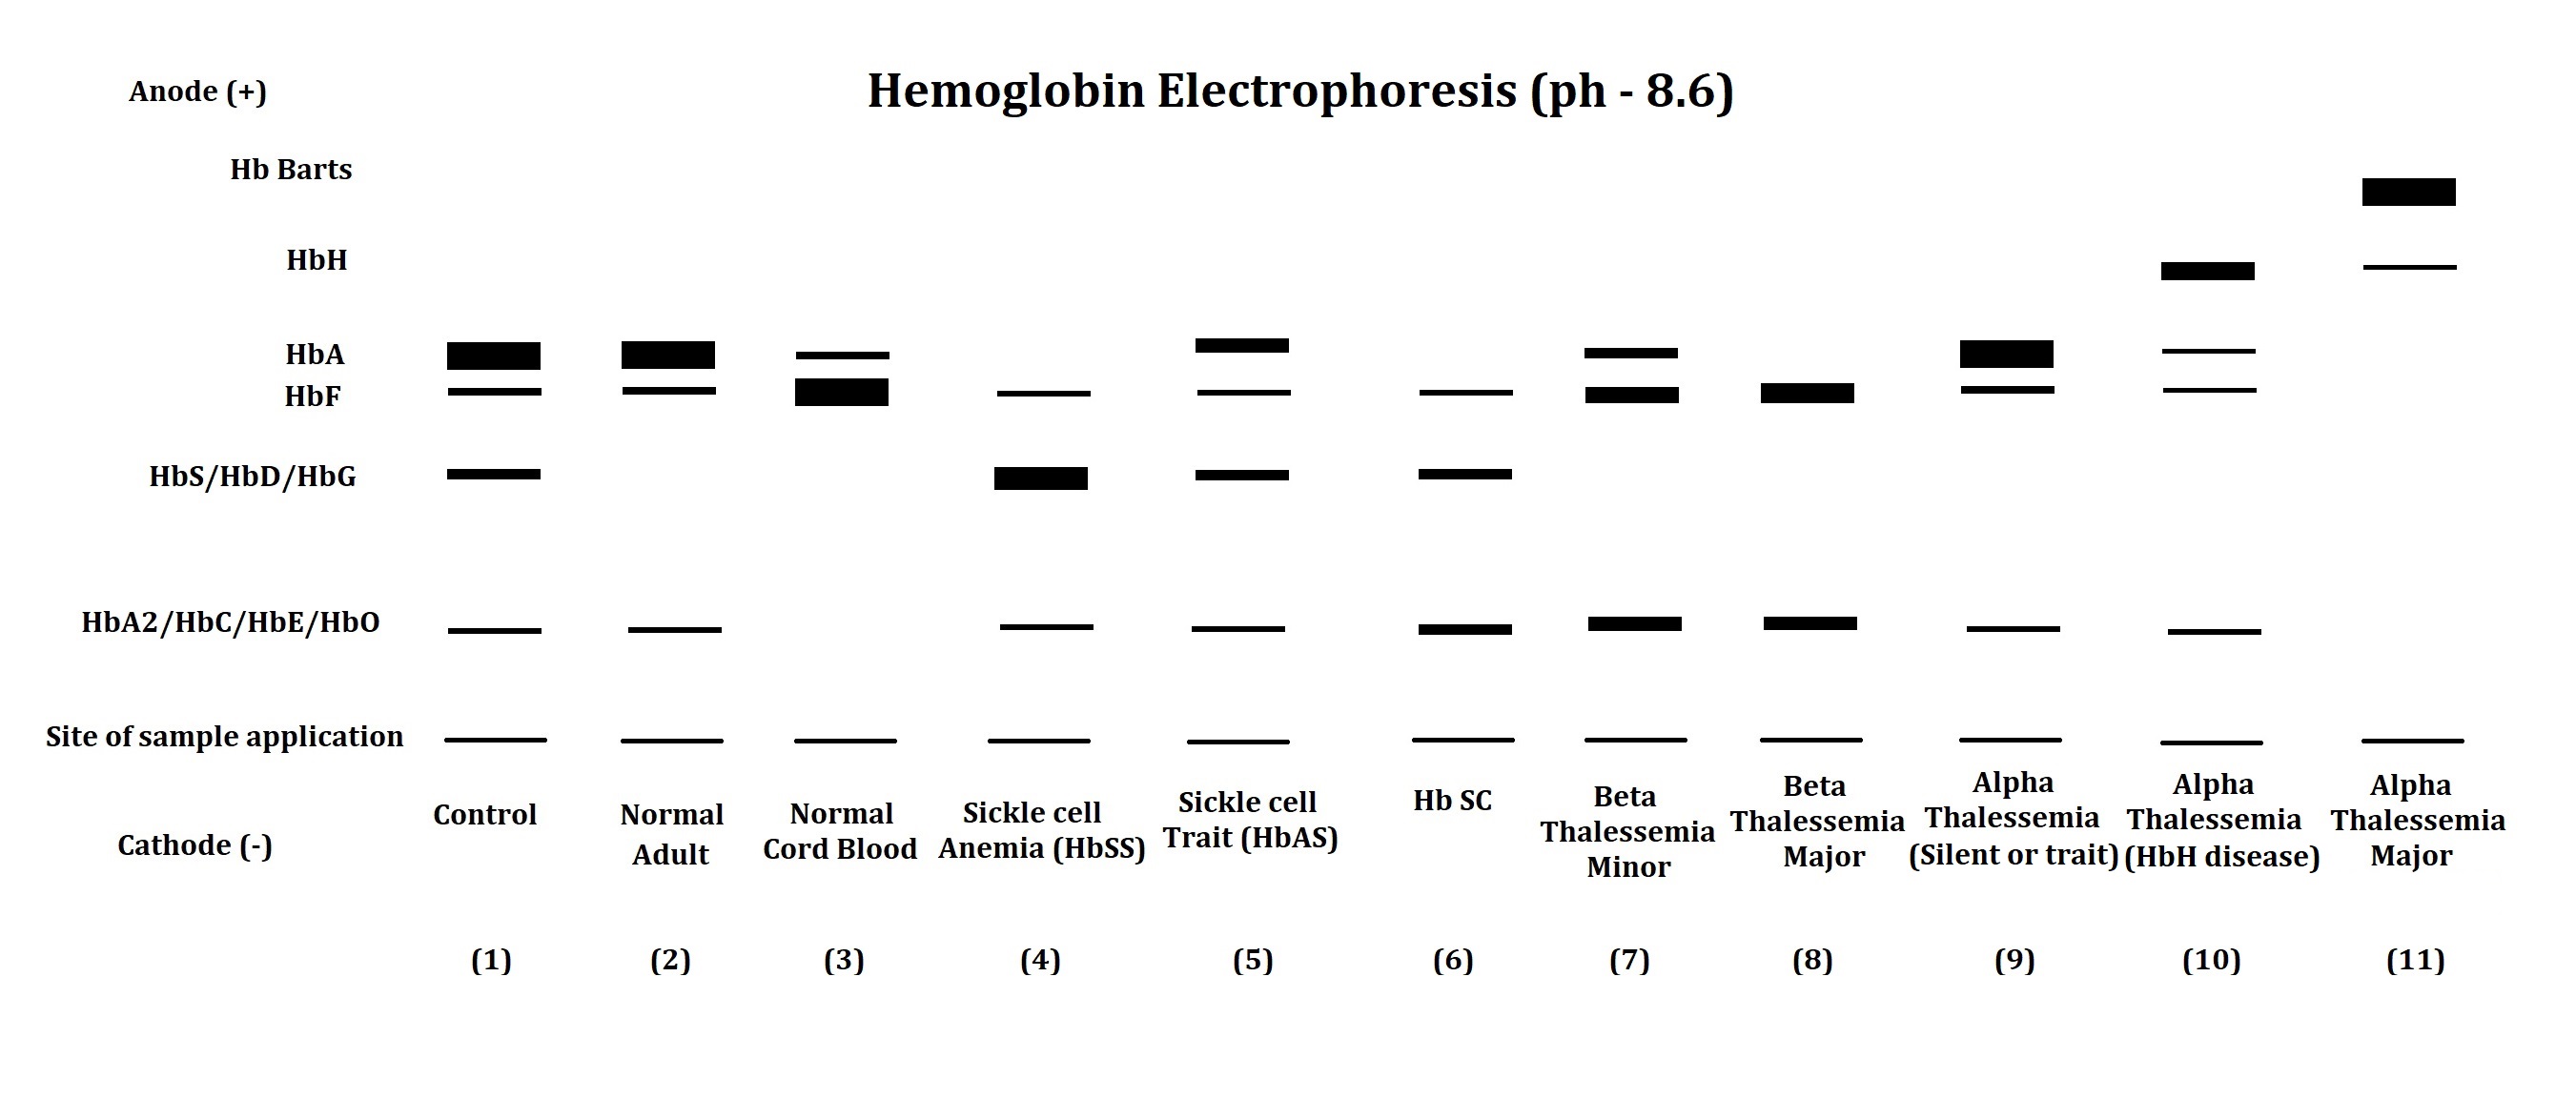 Hemoglobin electrophoresis pattern in different hemoglobinopathies and thalassemia.